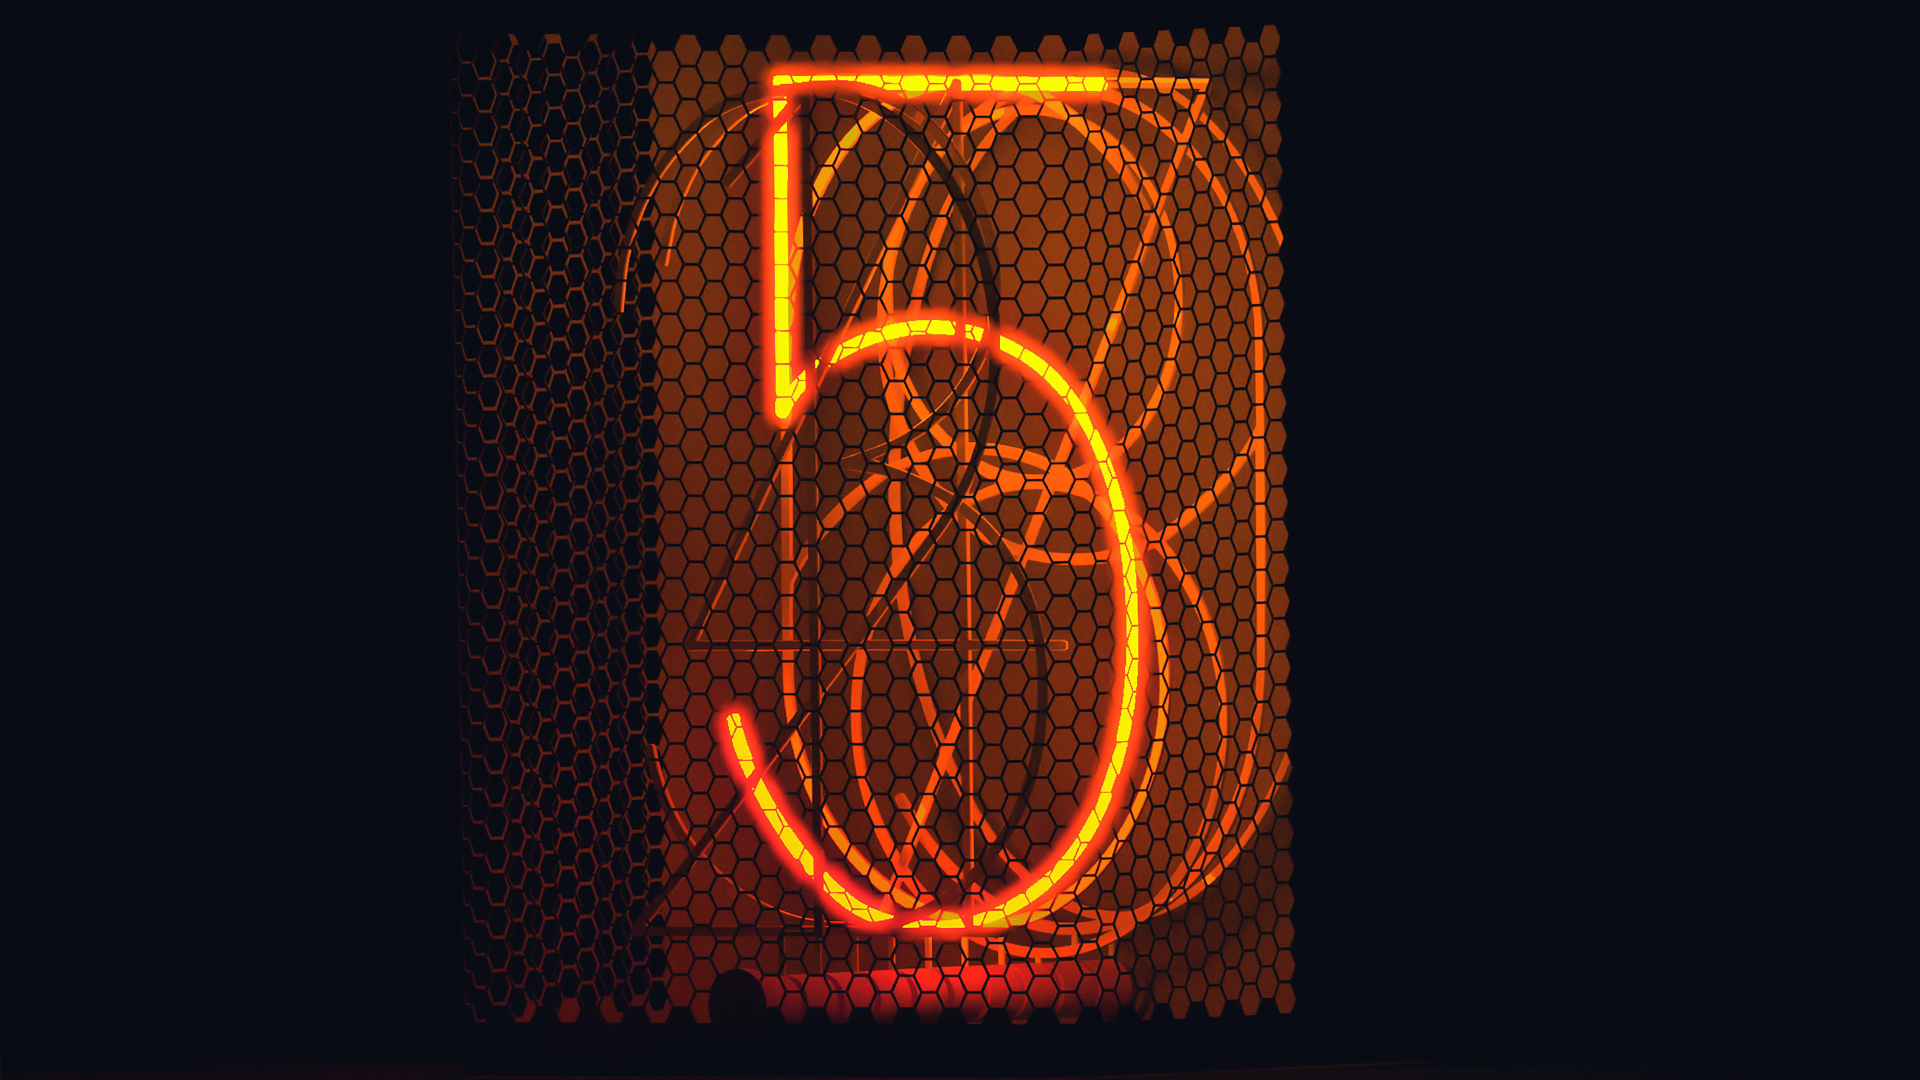 Neon light depicting the number five in orange